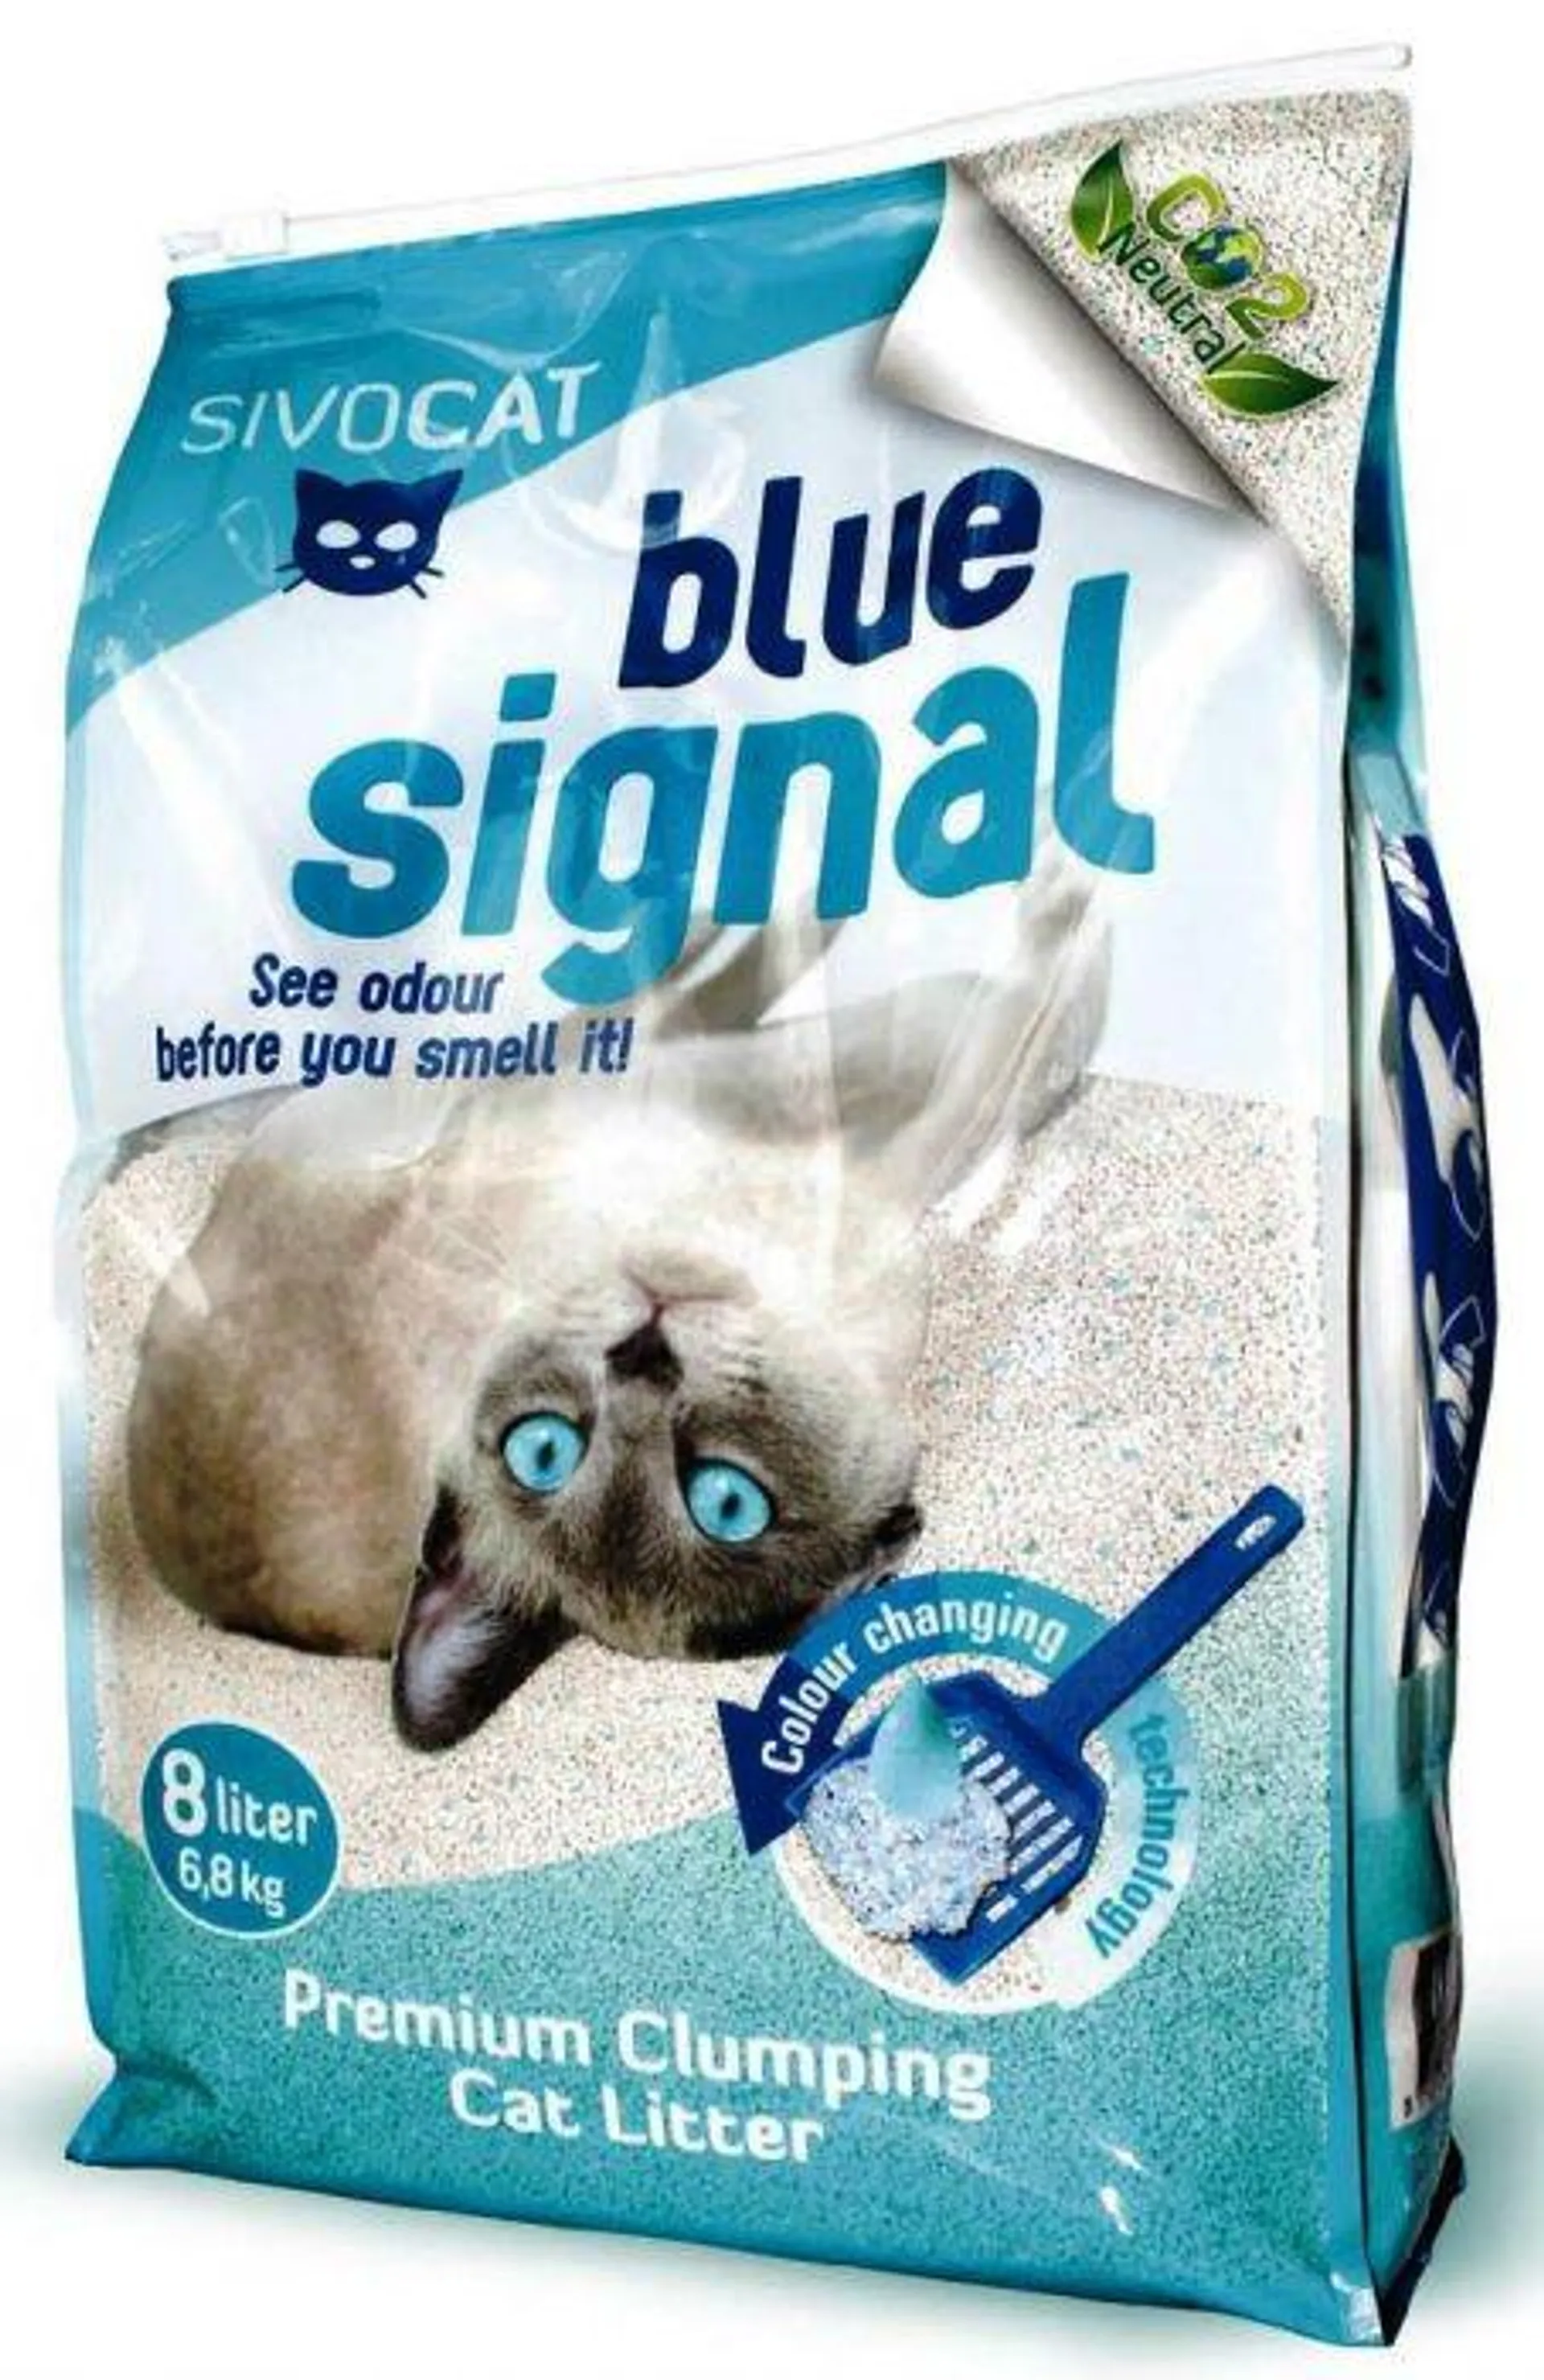 Sivocat blue signal 8 ltr